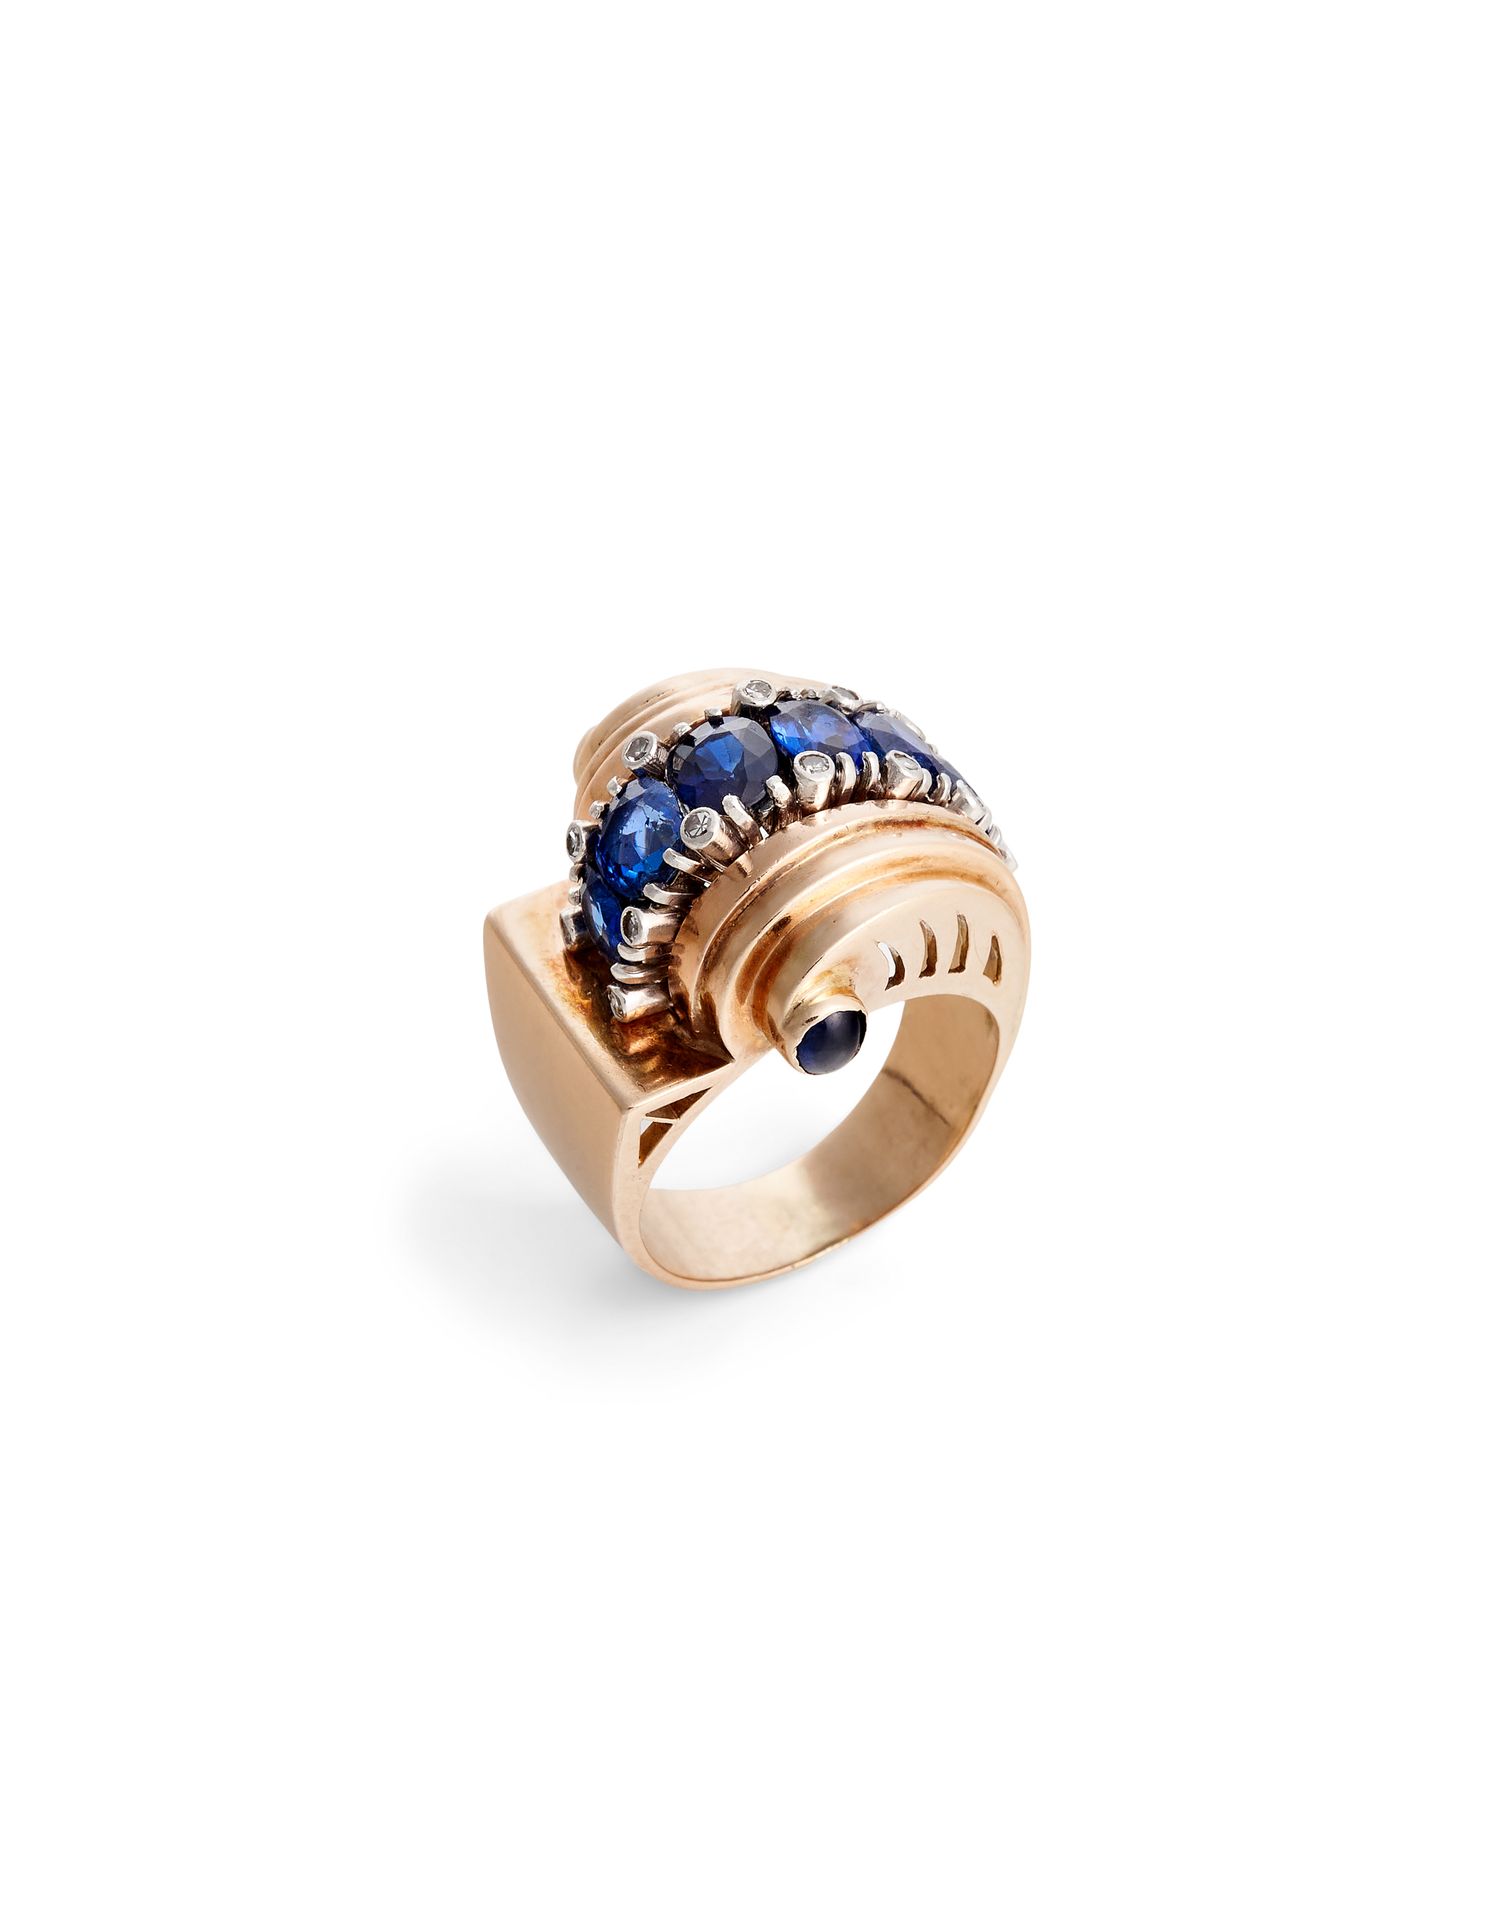 Null 1940年代 蓝宝石戒指 18K黄金，镶嵌6颗椭圆形蓝宝石，14颗钻石和2颗凸圆形蓝宝石，具有Mellerio的风格。

印记：痕迹

尺寸：50 -&hellip;